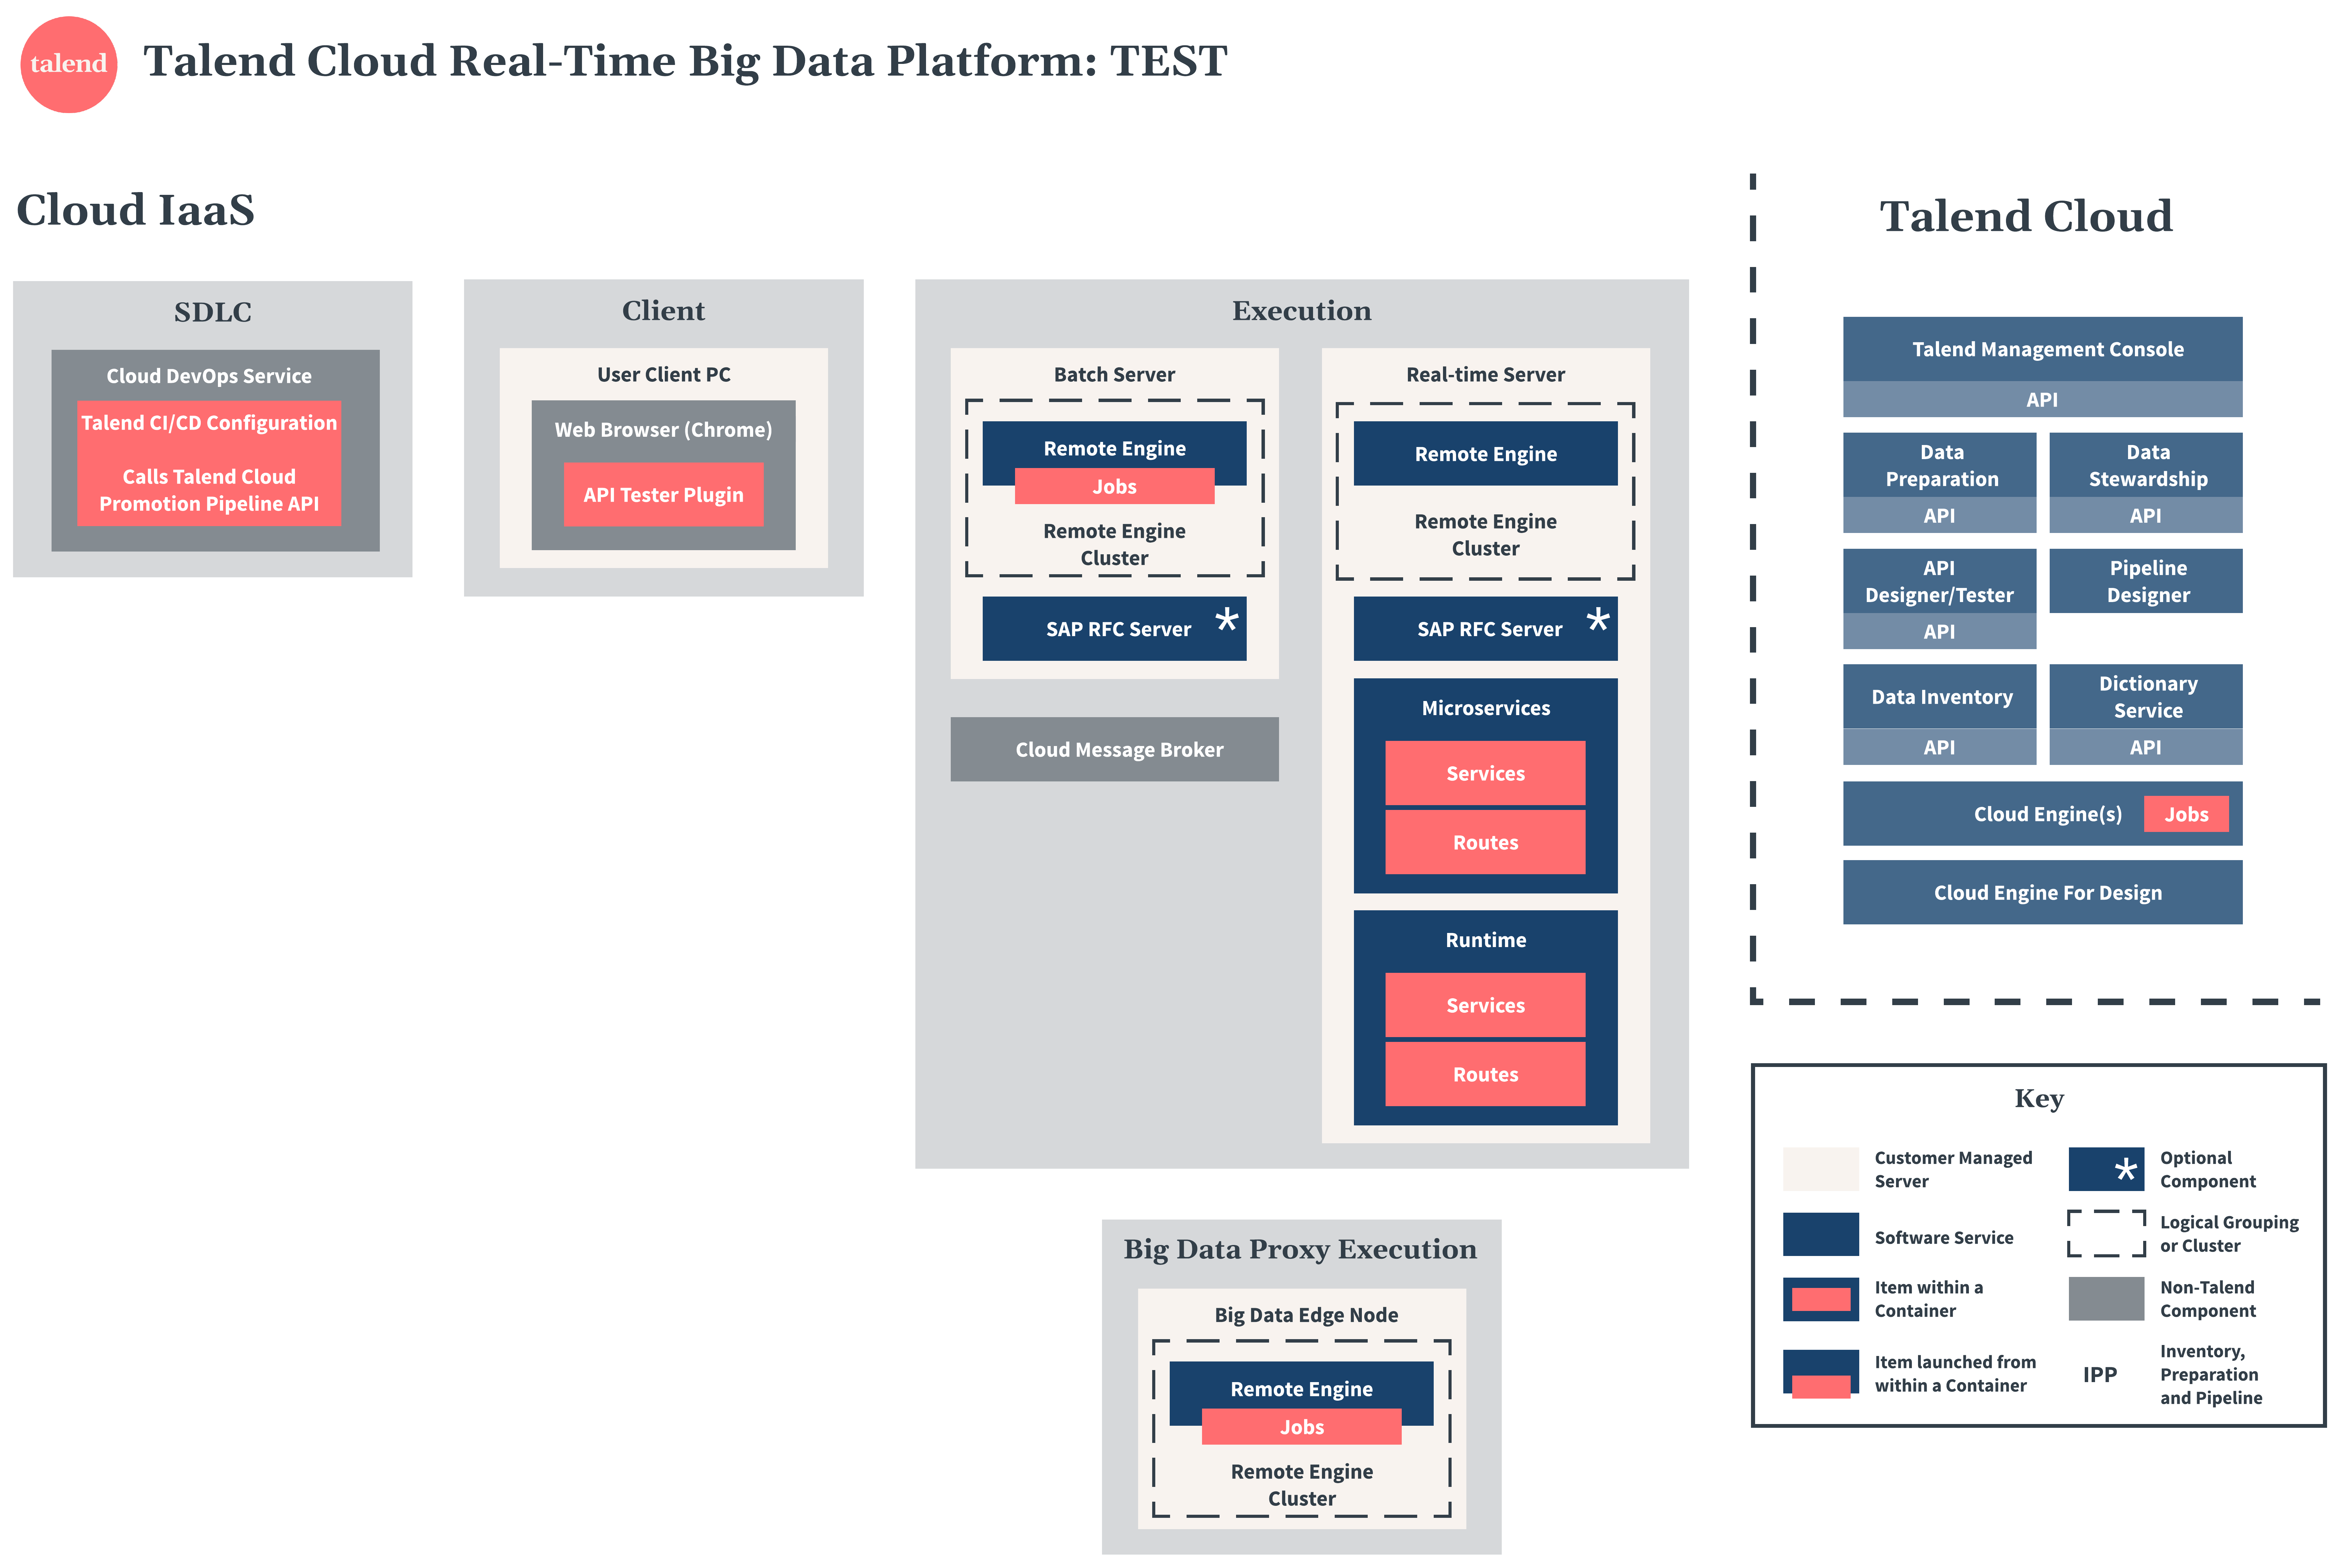 Talend Cloud Diagramm zu Real-Time Big Data Platform-Test.